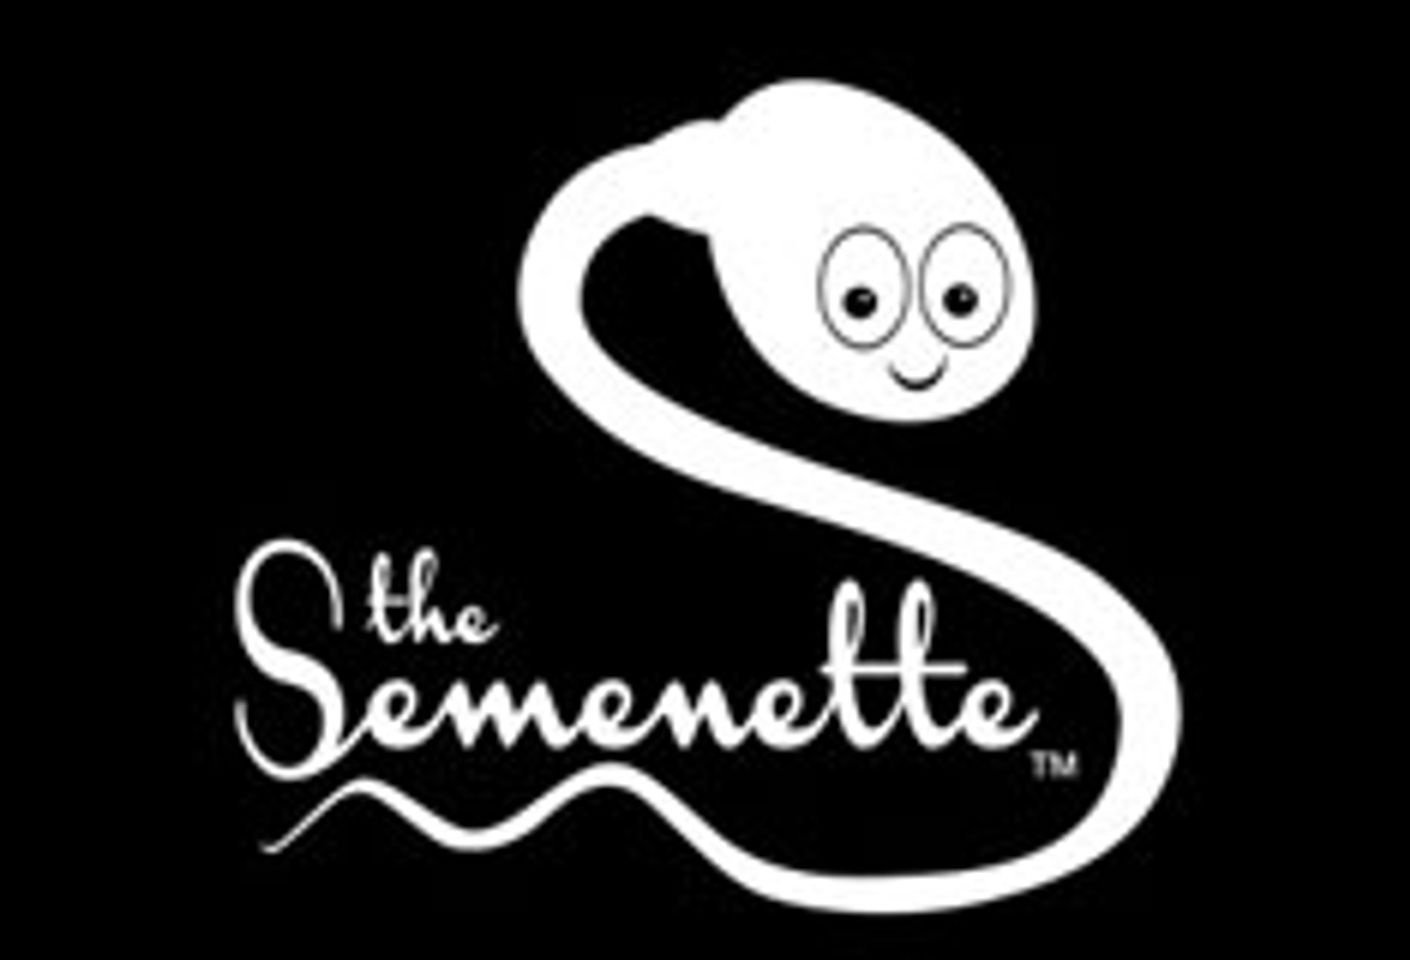 The Semenette Earns 2 Nominations For 2016 ‘O’ Awards